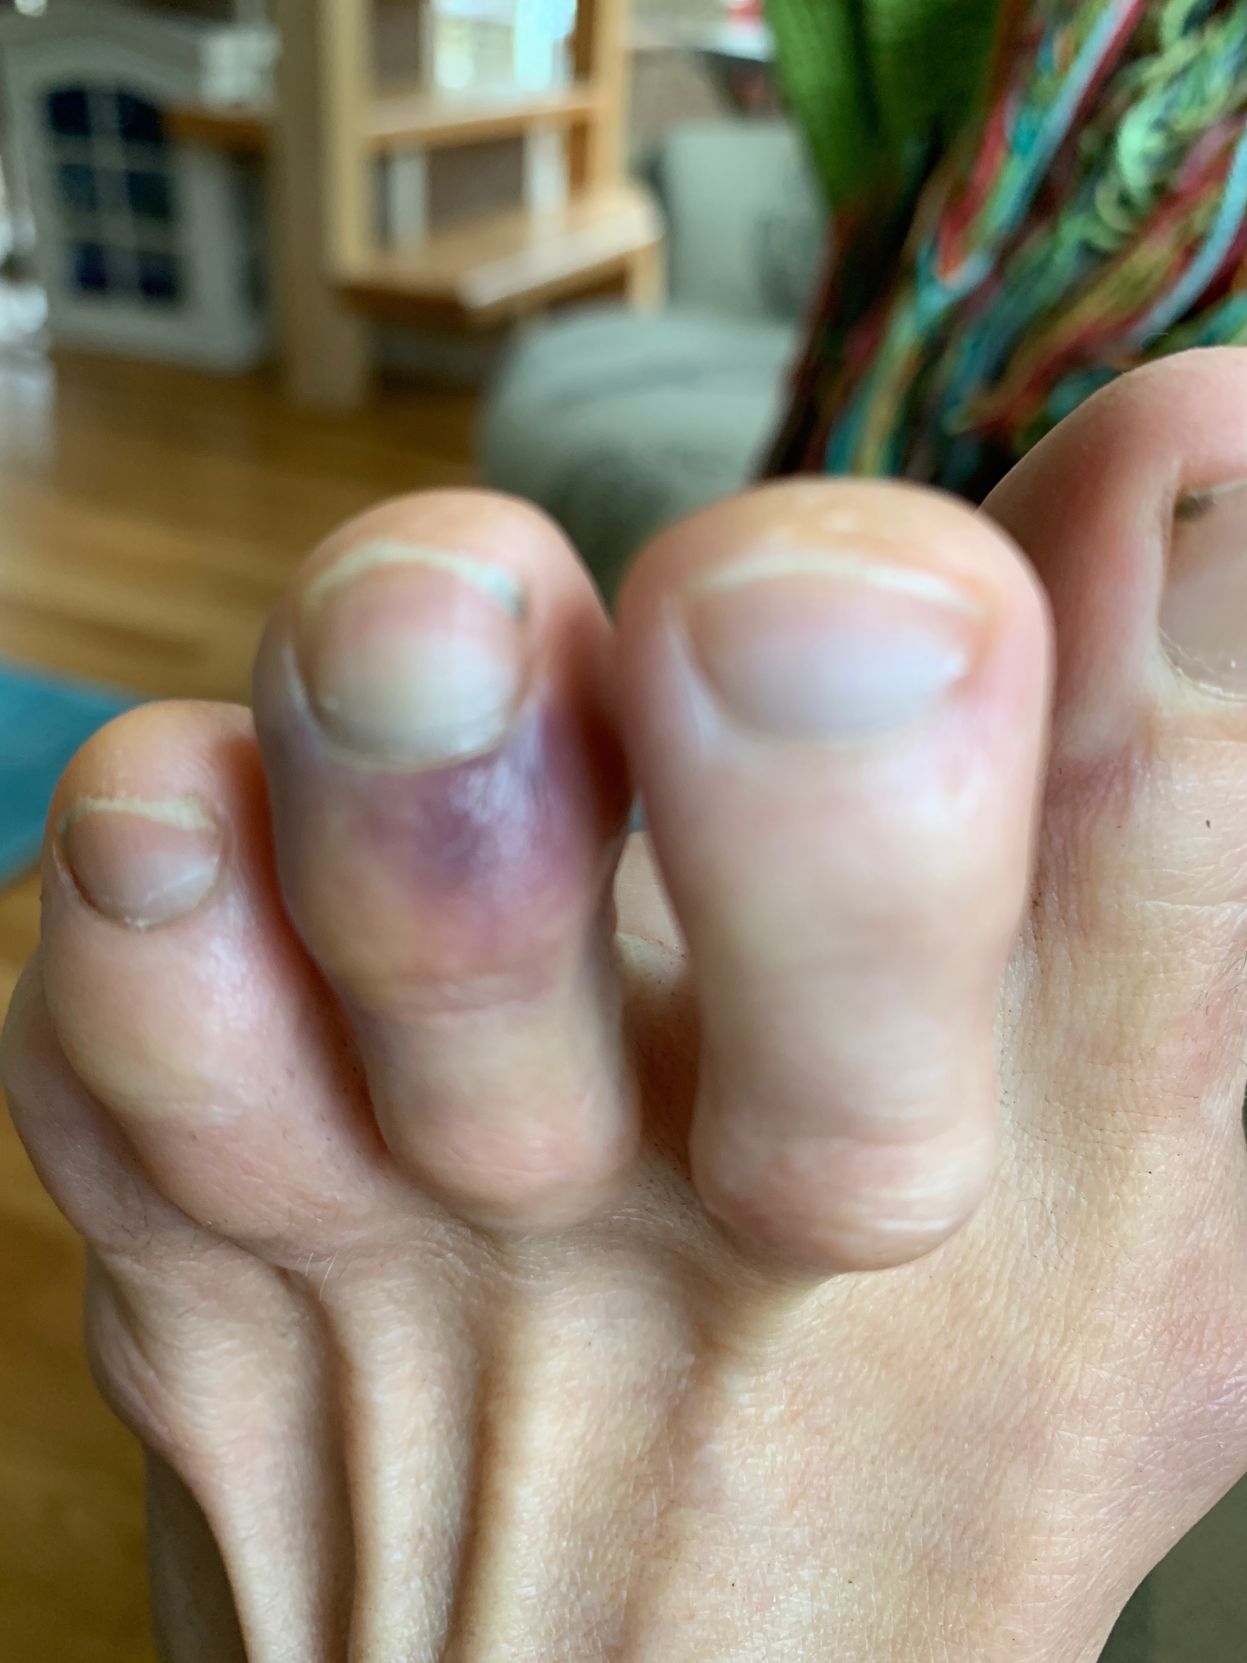 pinky toe is black